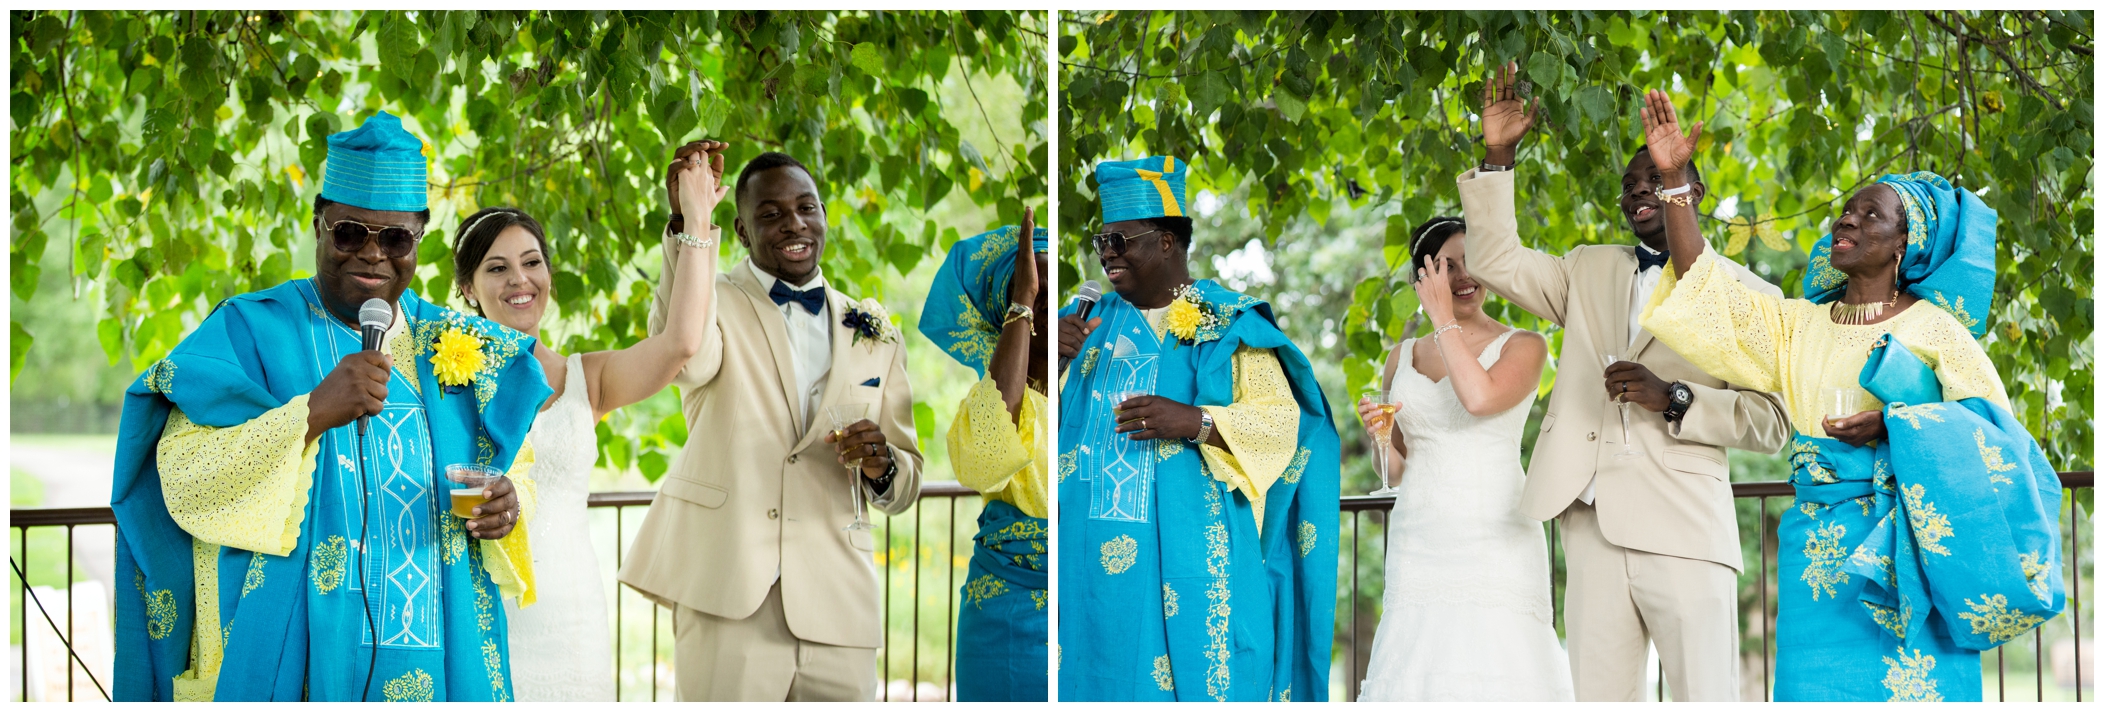 Denver nigerian wedding 